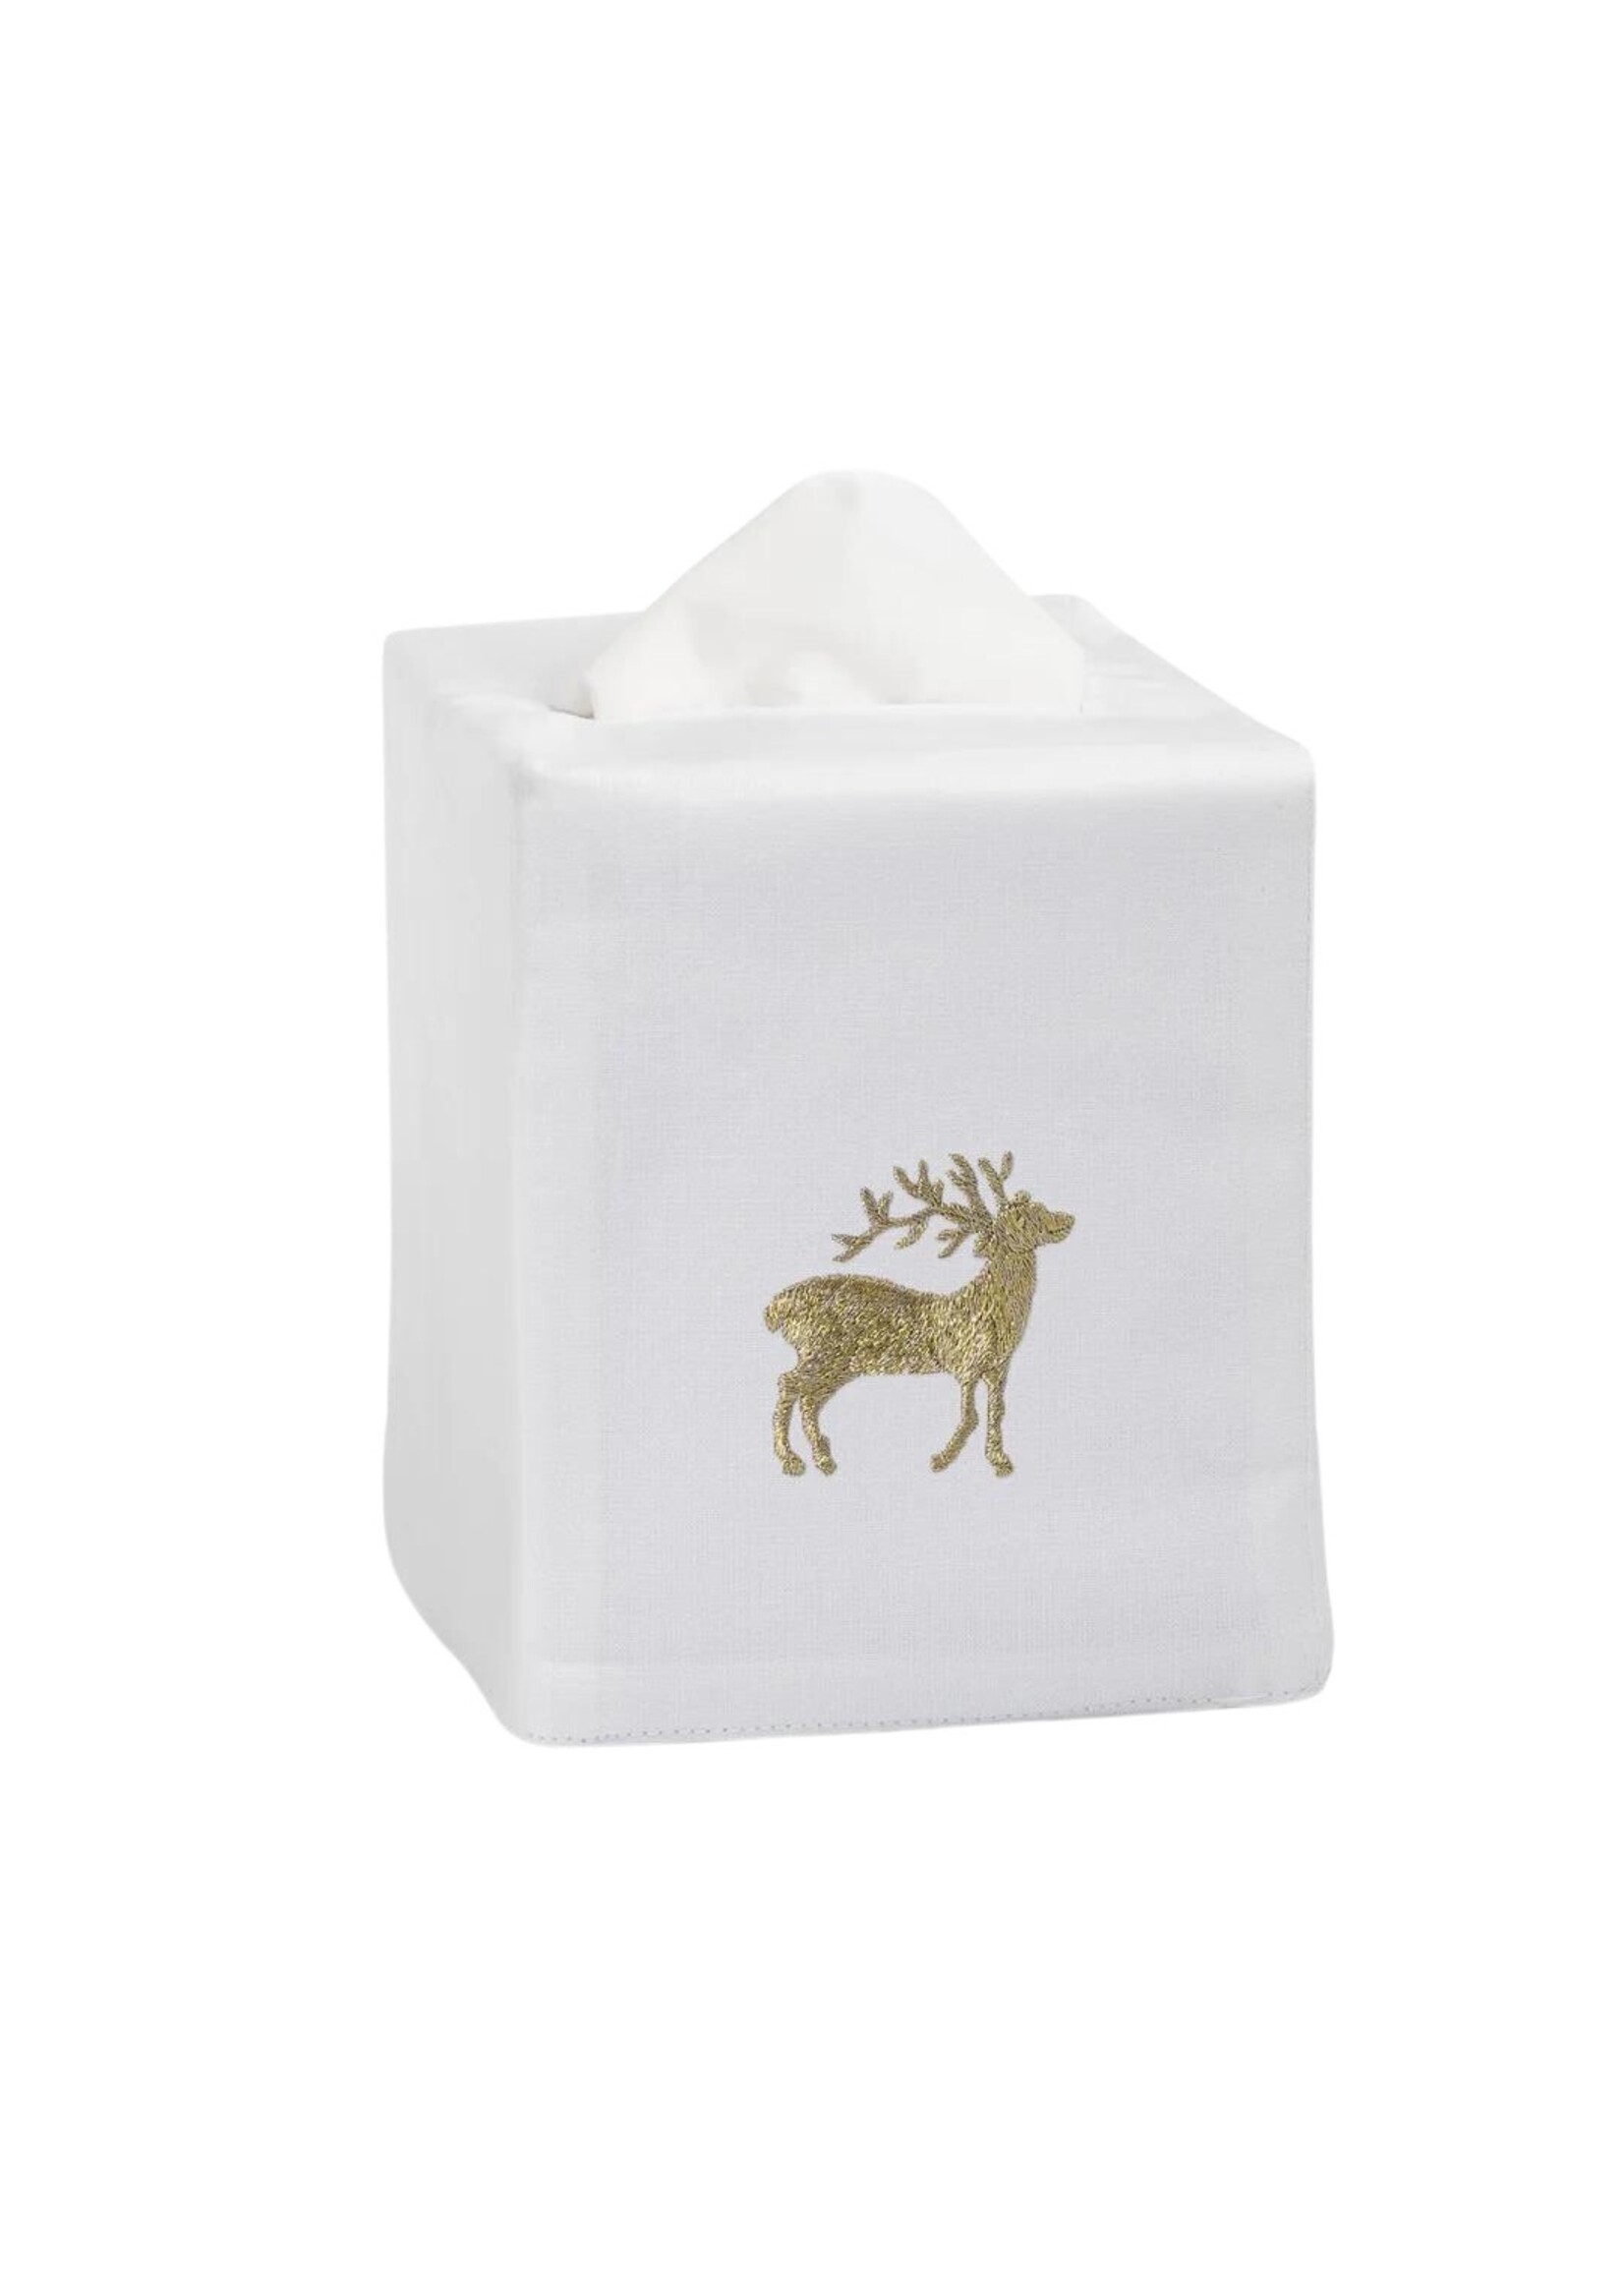 Henry Handwork Tissue Box Cover - Reindeer Gold